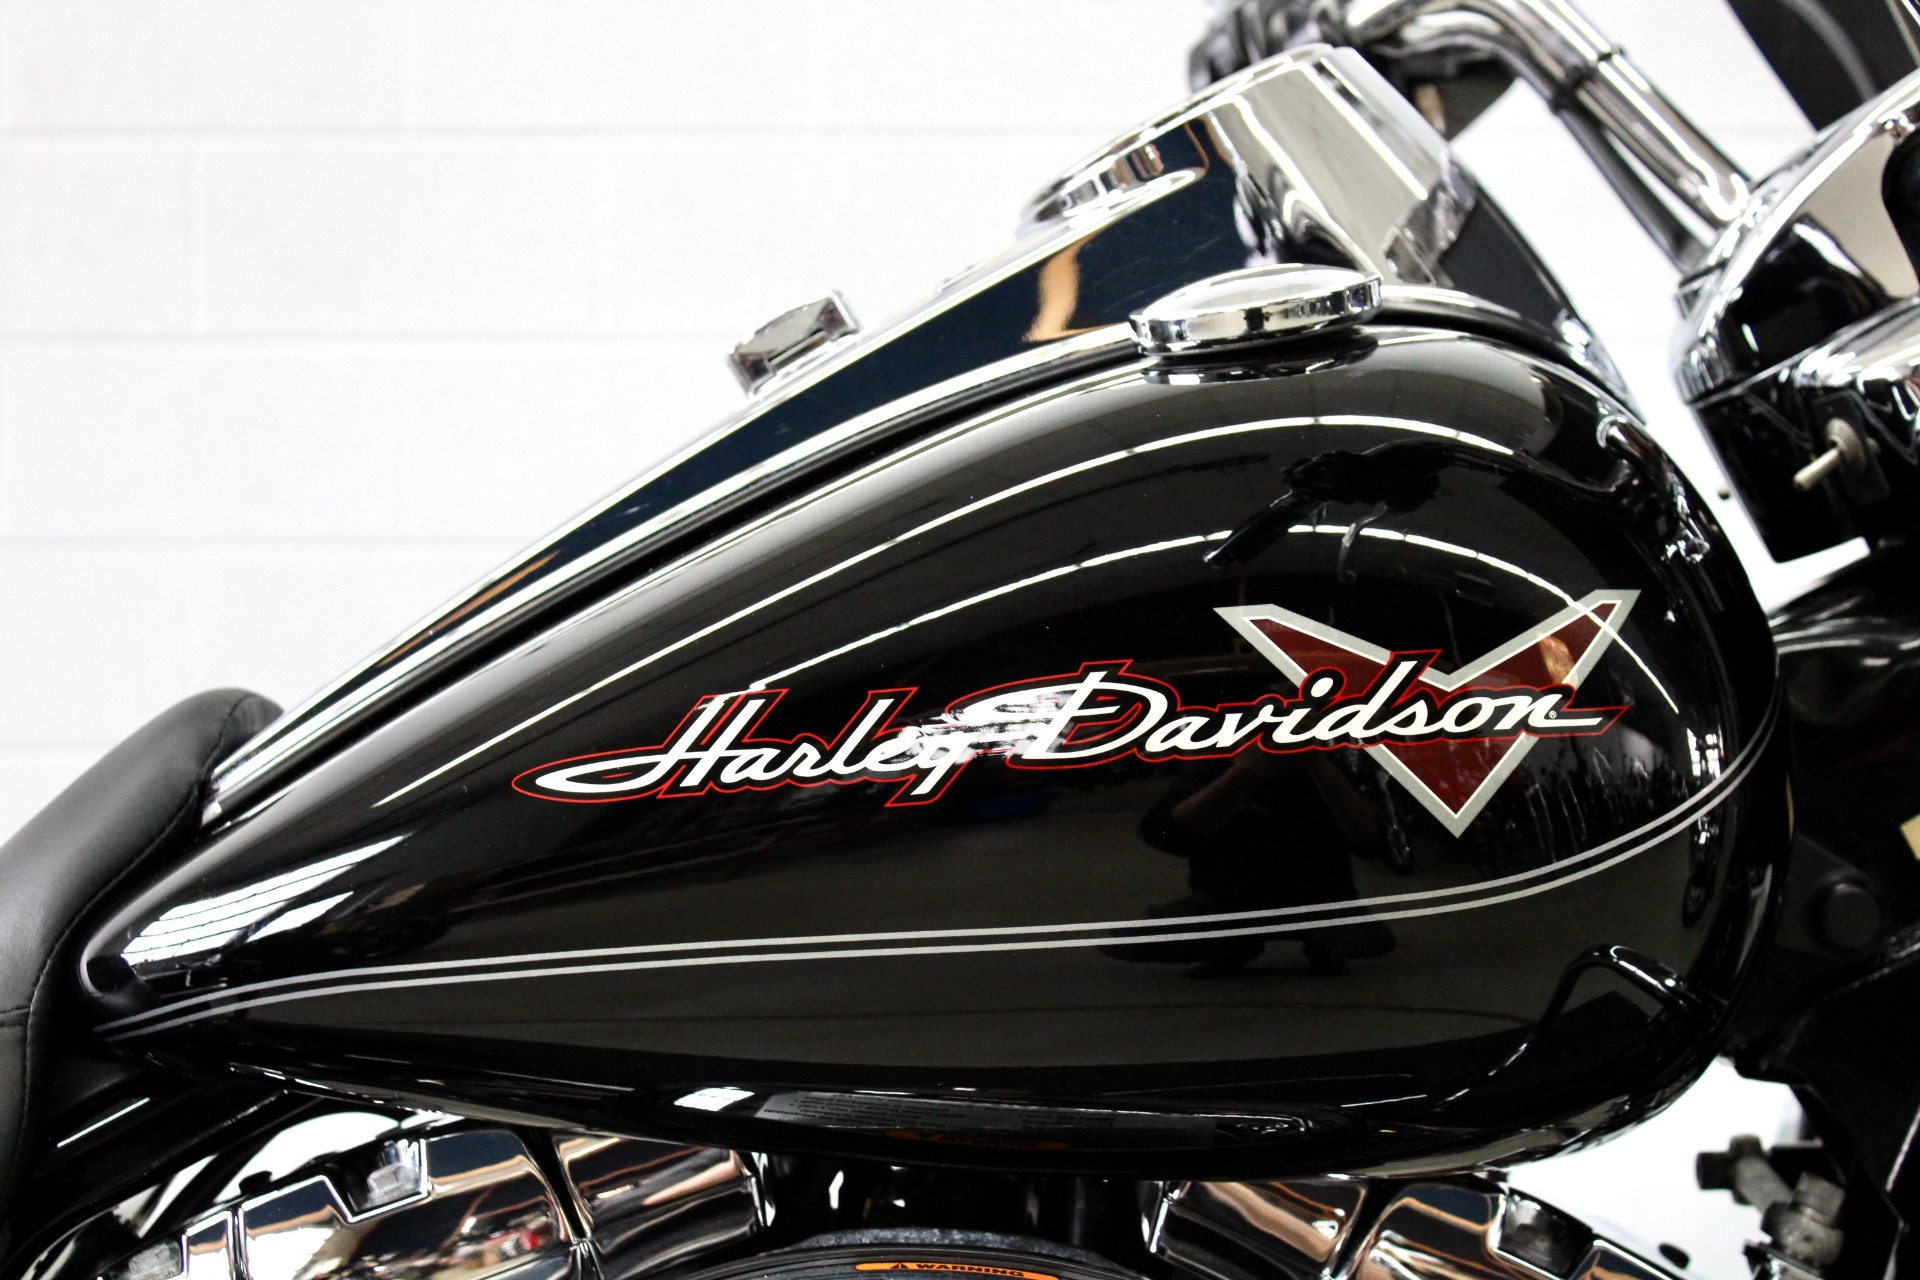 2011 Harley-Davidson Road King® in Fredericksburg, Virginia - Photo 13